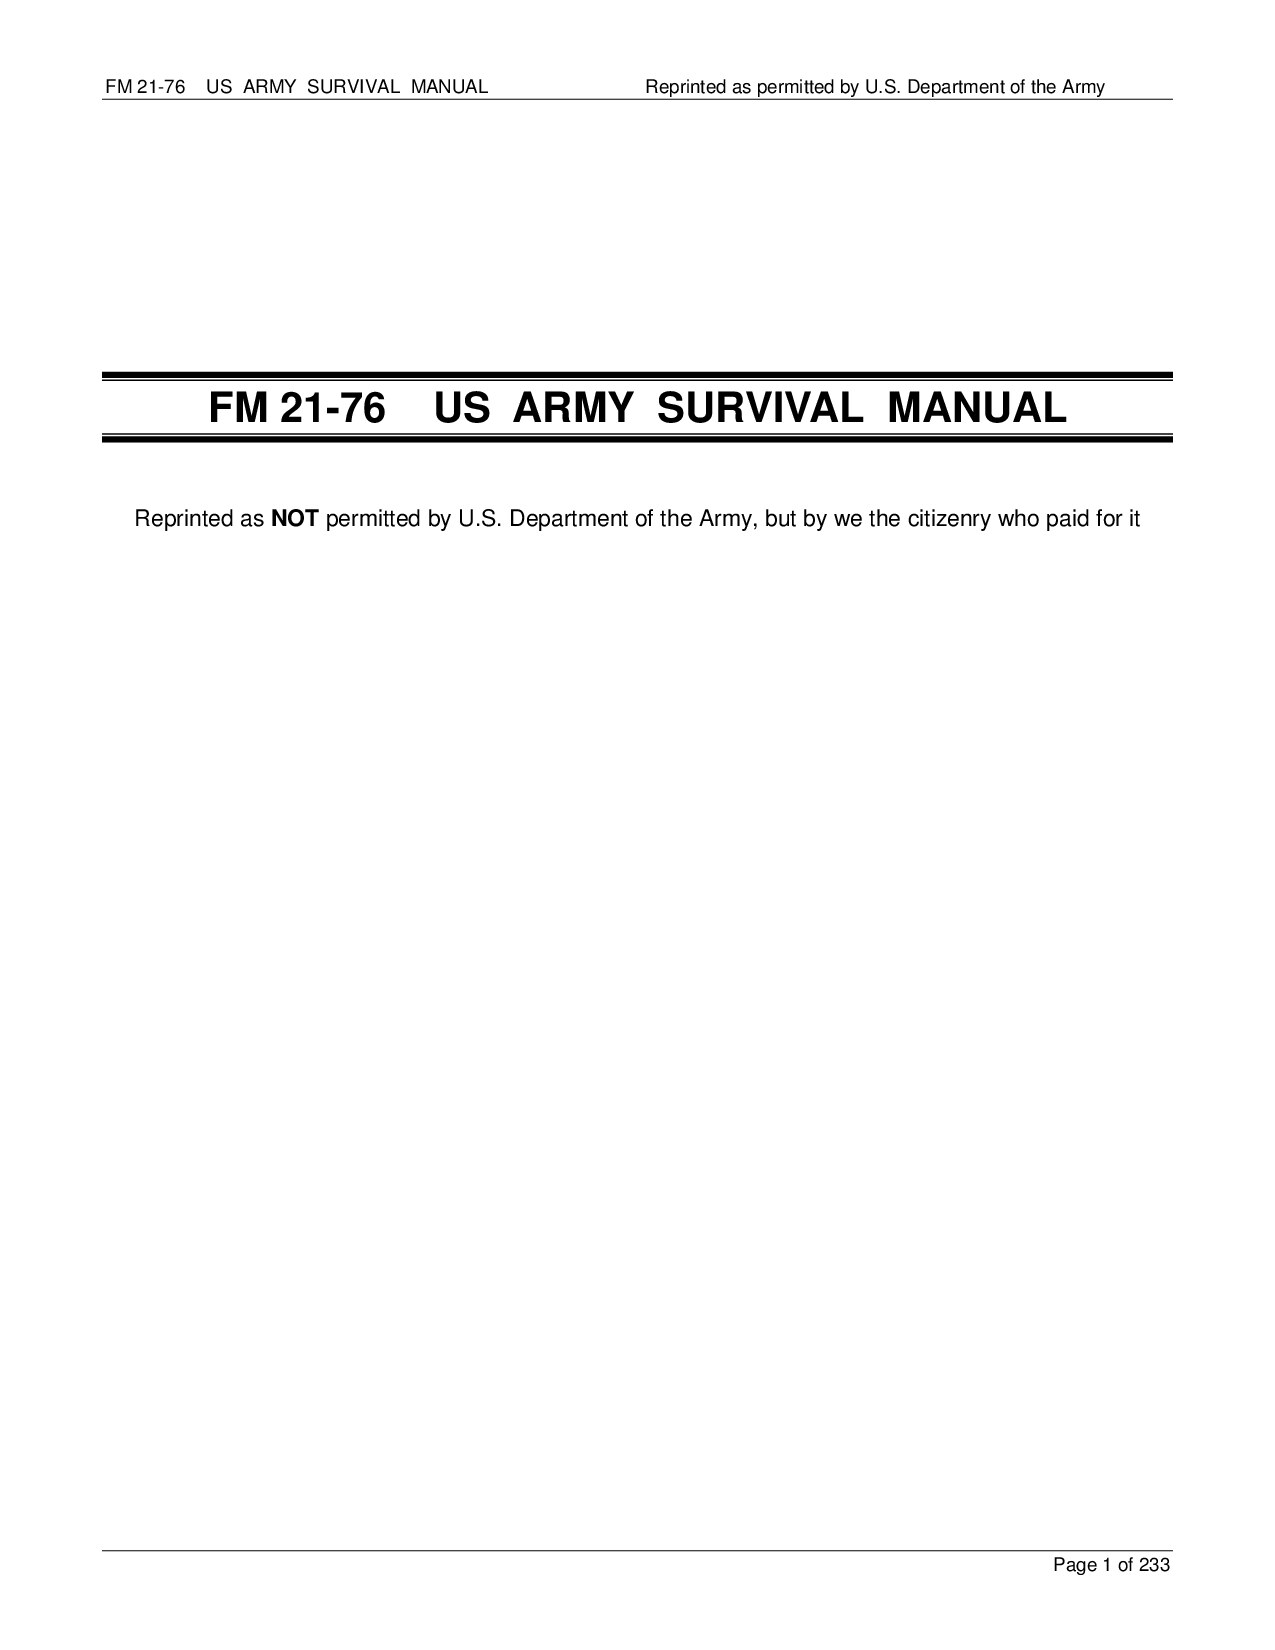 FM 21-76: US Army Survival Manual